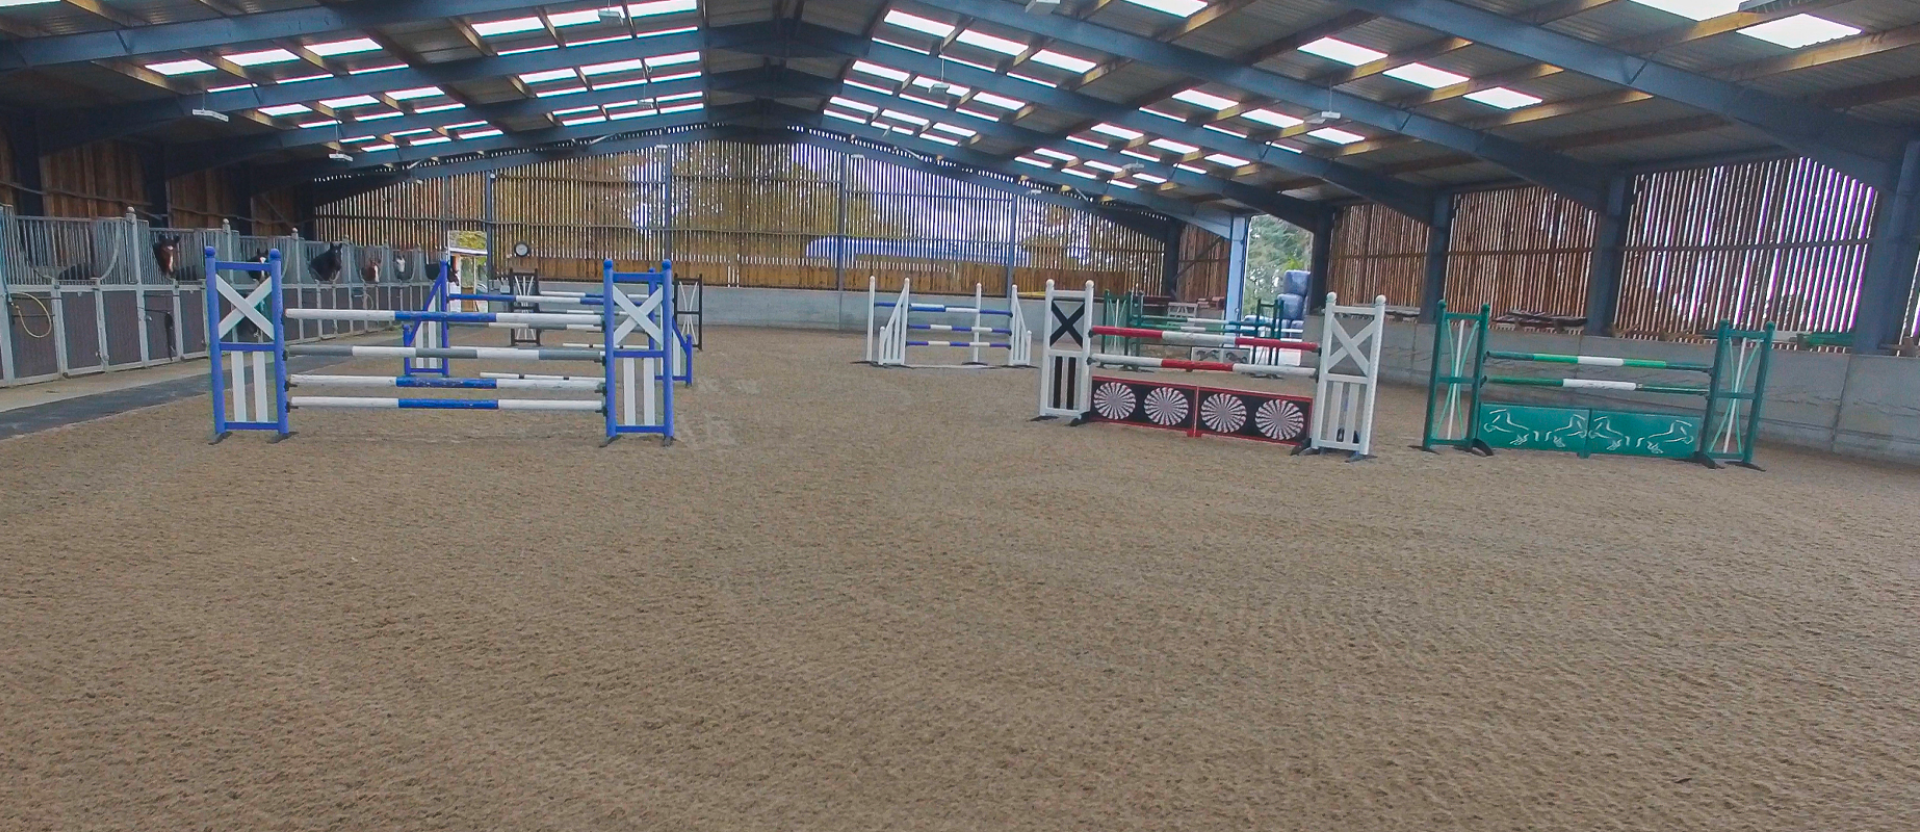 Equestrian arena with hurdles